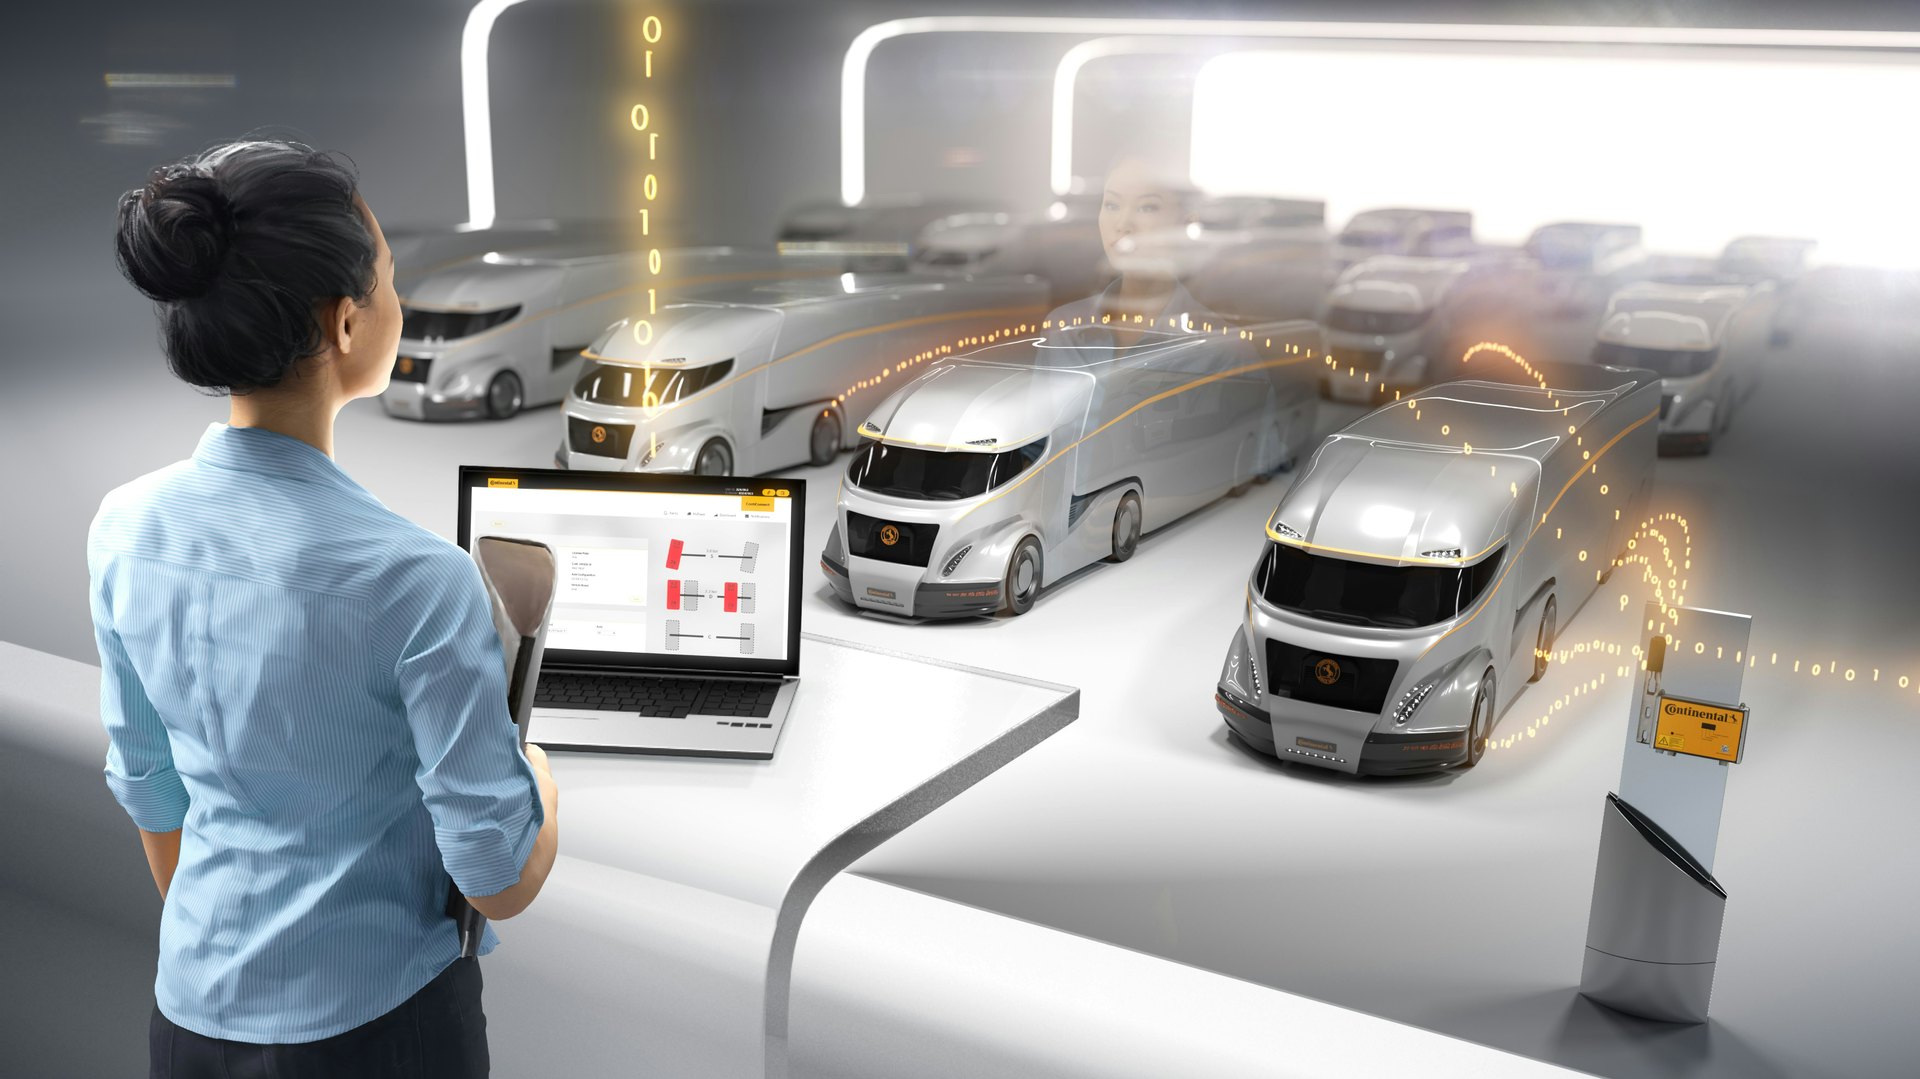 TIS-Web® Fleet by Continental Automotive GmbH